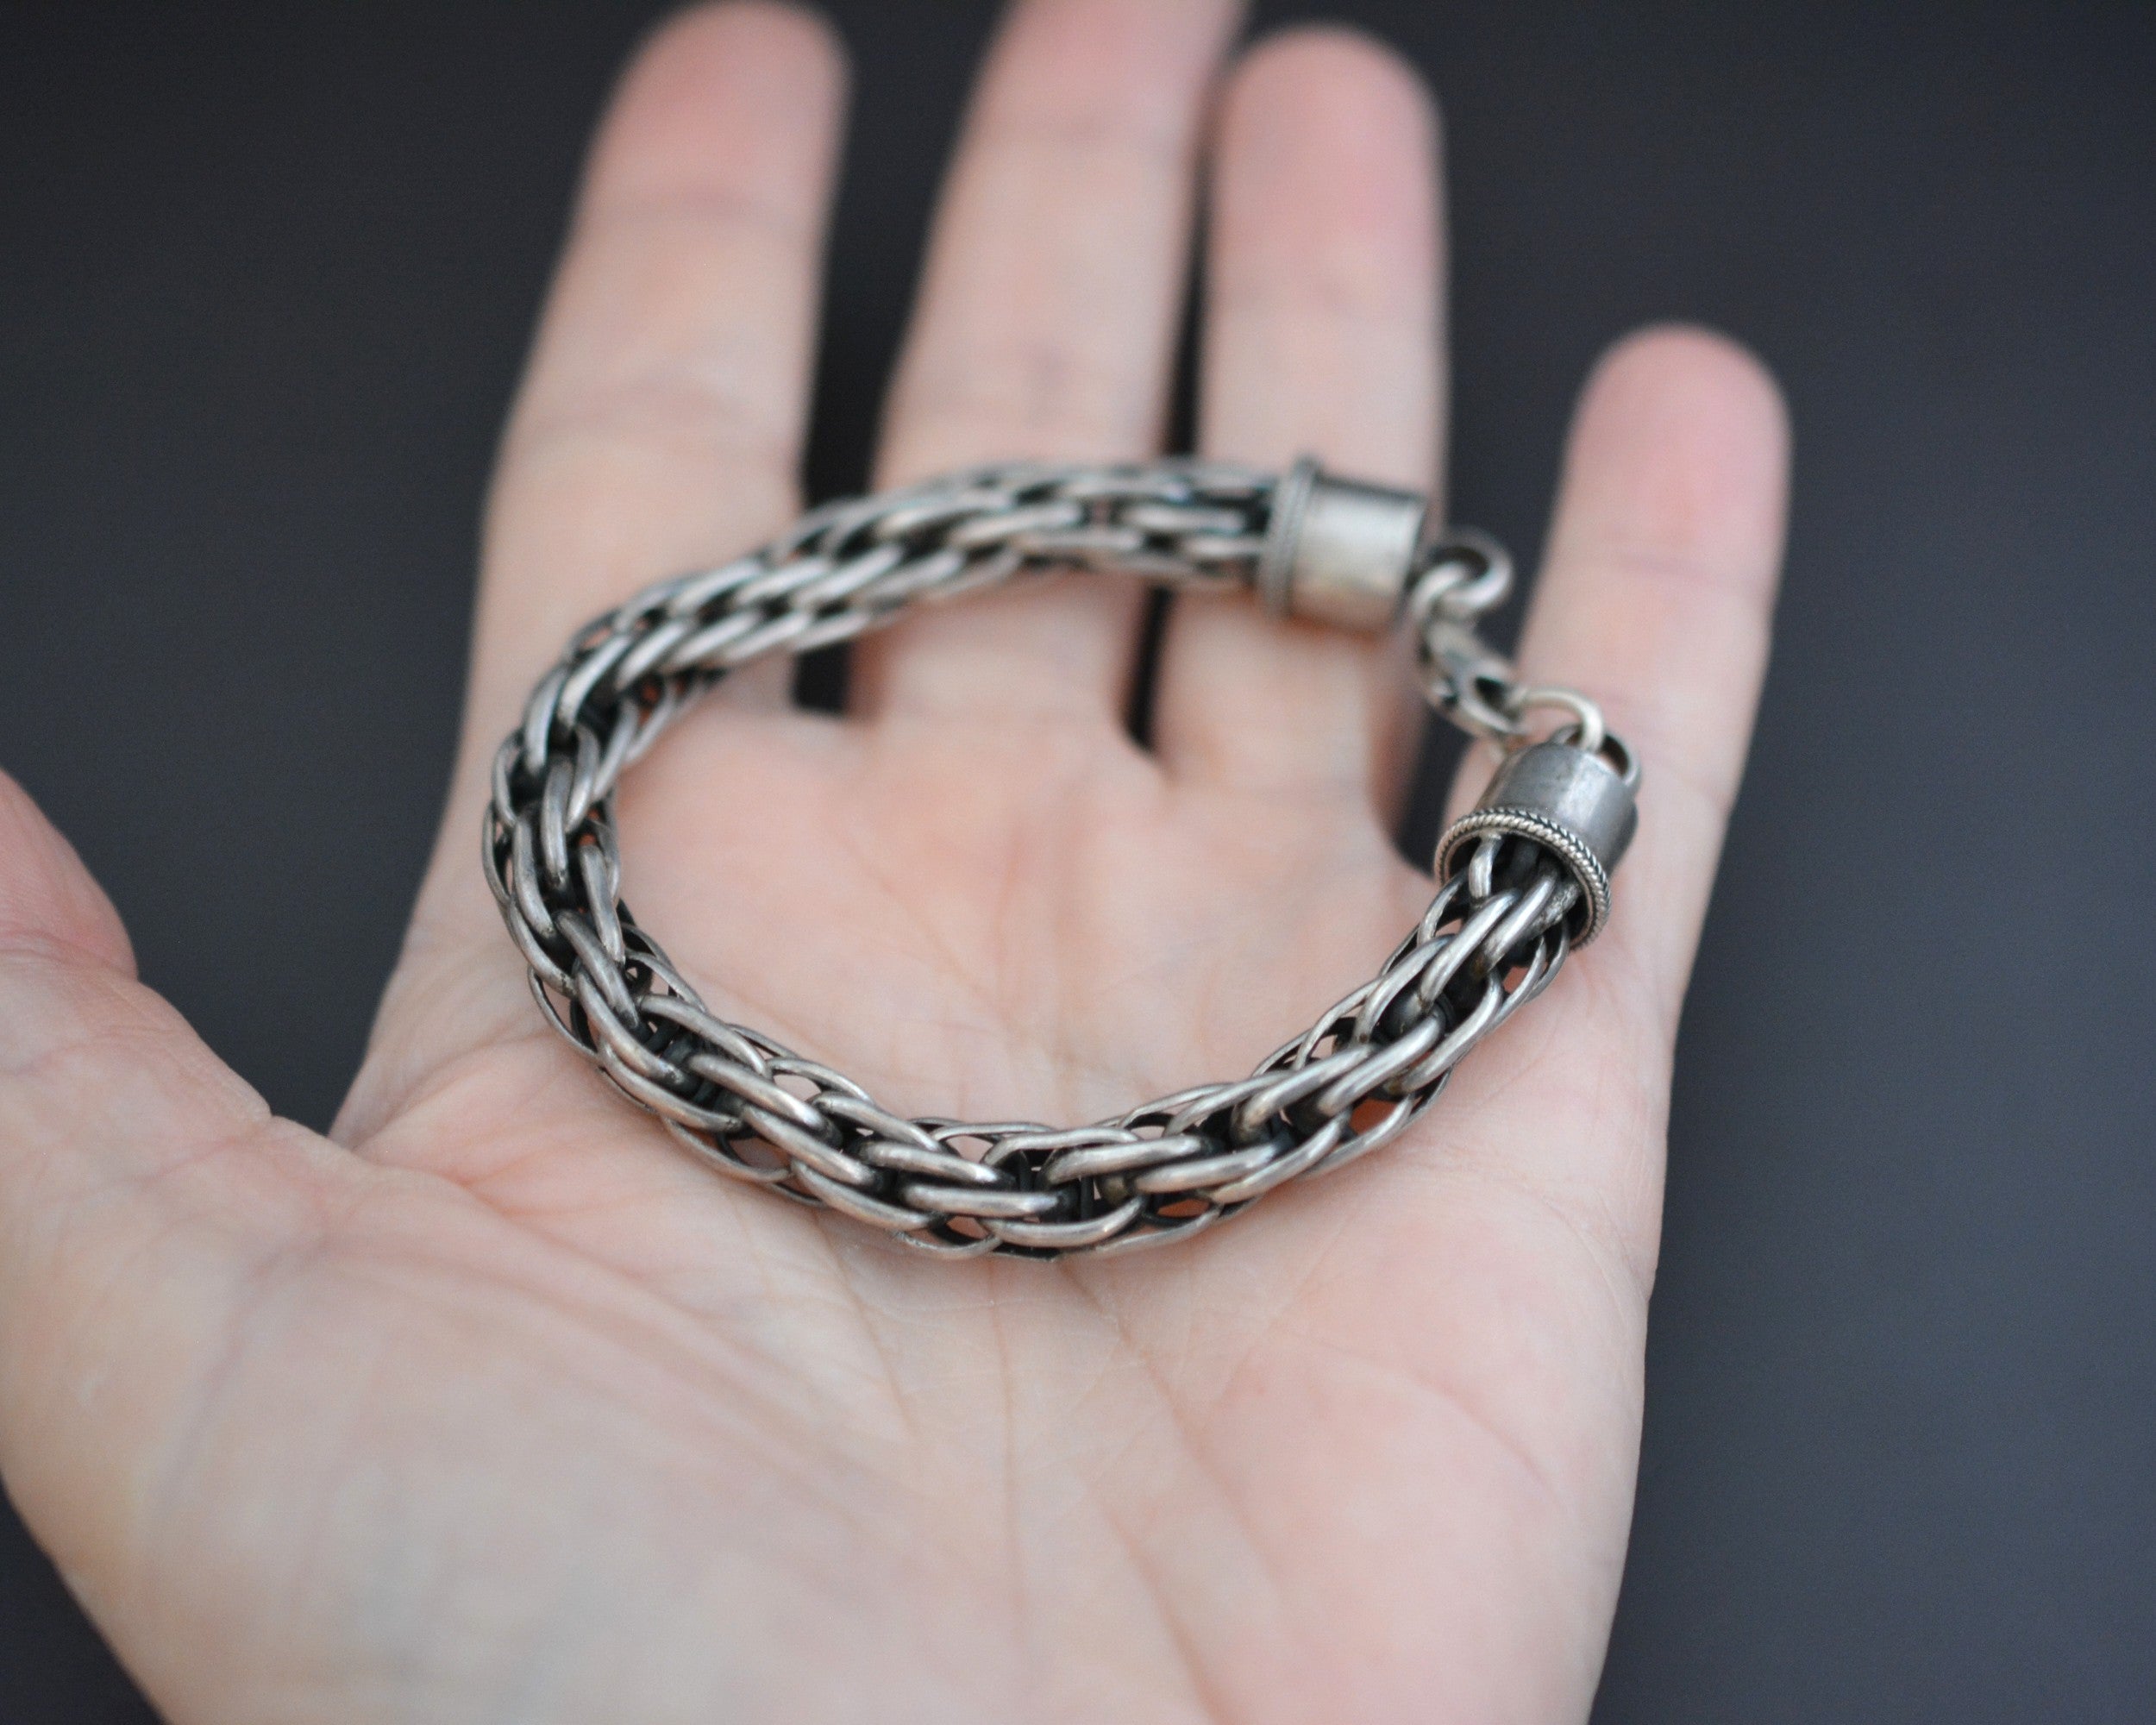 Thick Woven Silver Snake Chain Bracelet - XS size